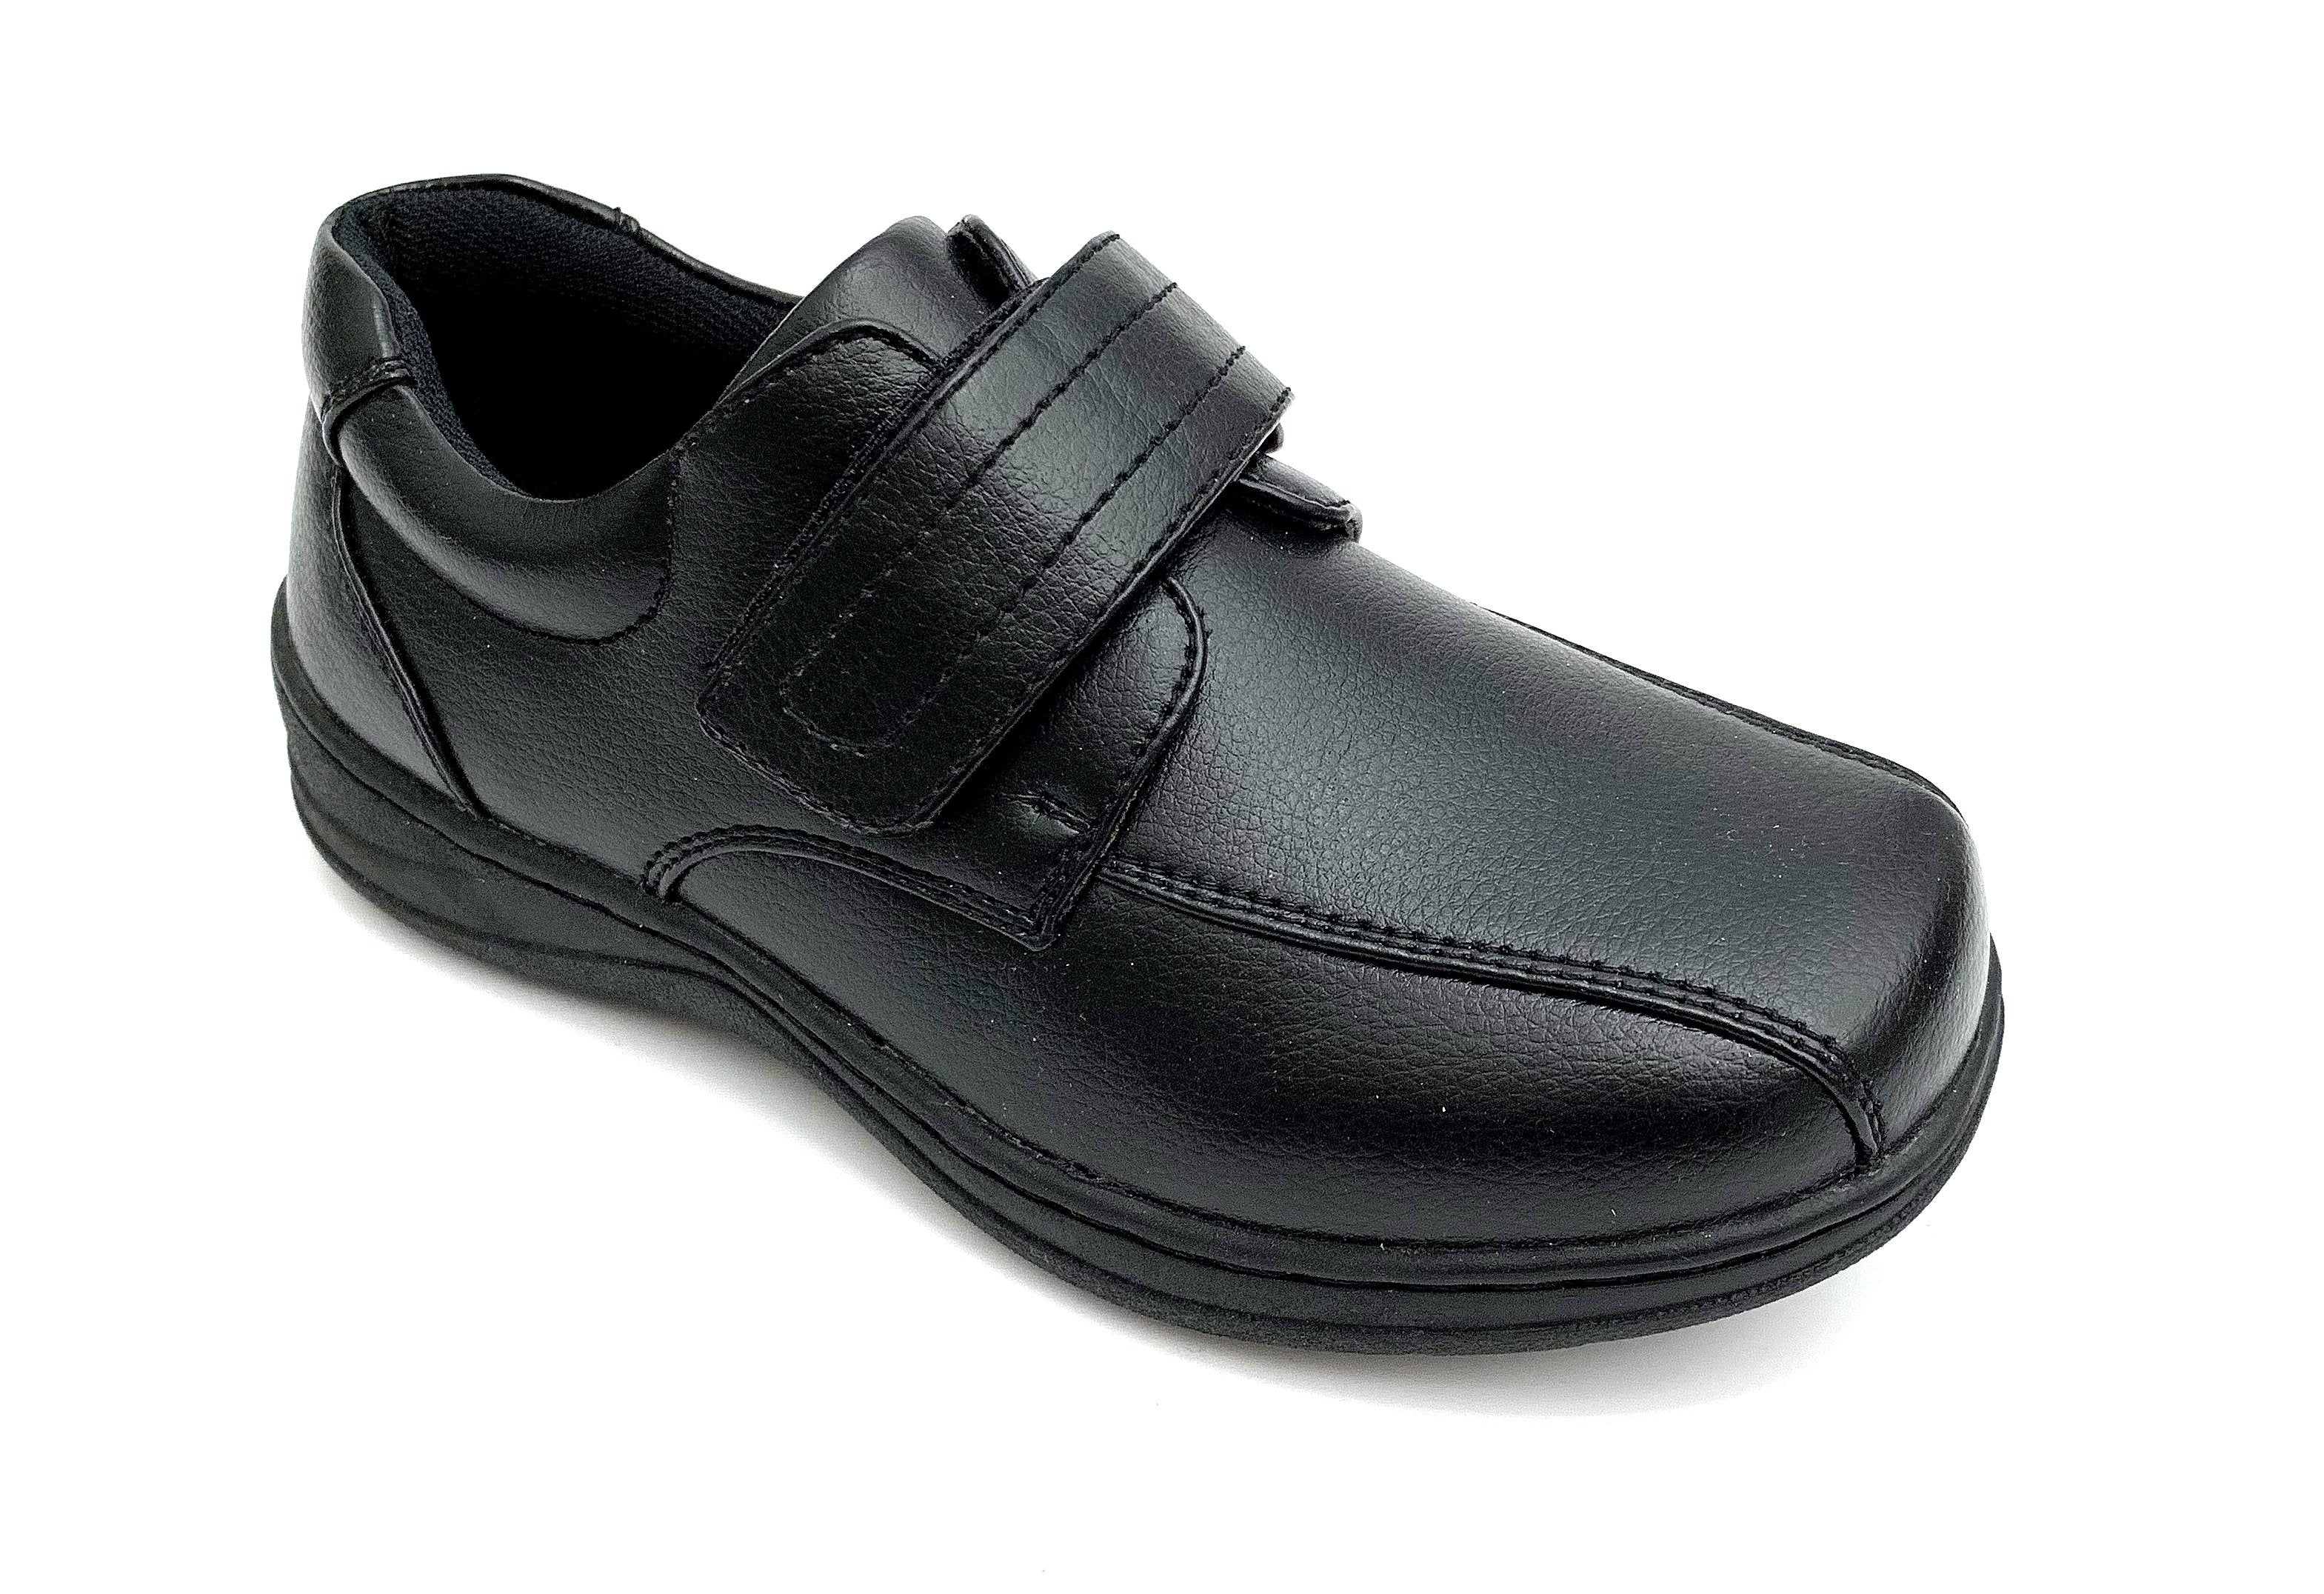 Boys Black Velcro Shoes | Metro School Uniforms | Reviews on Judge.me